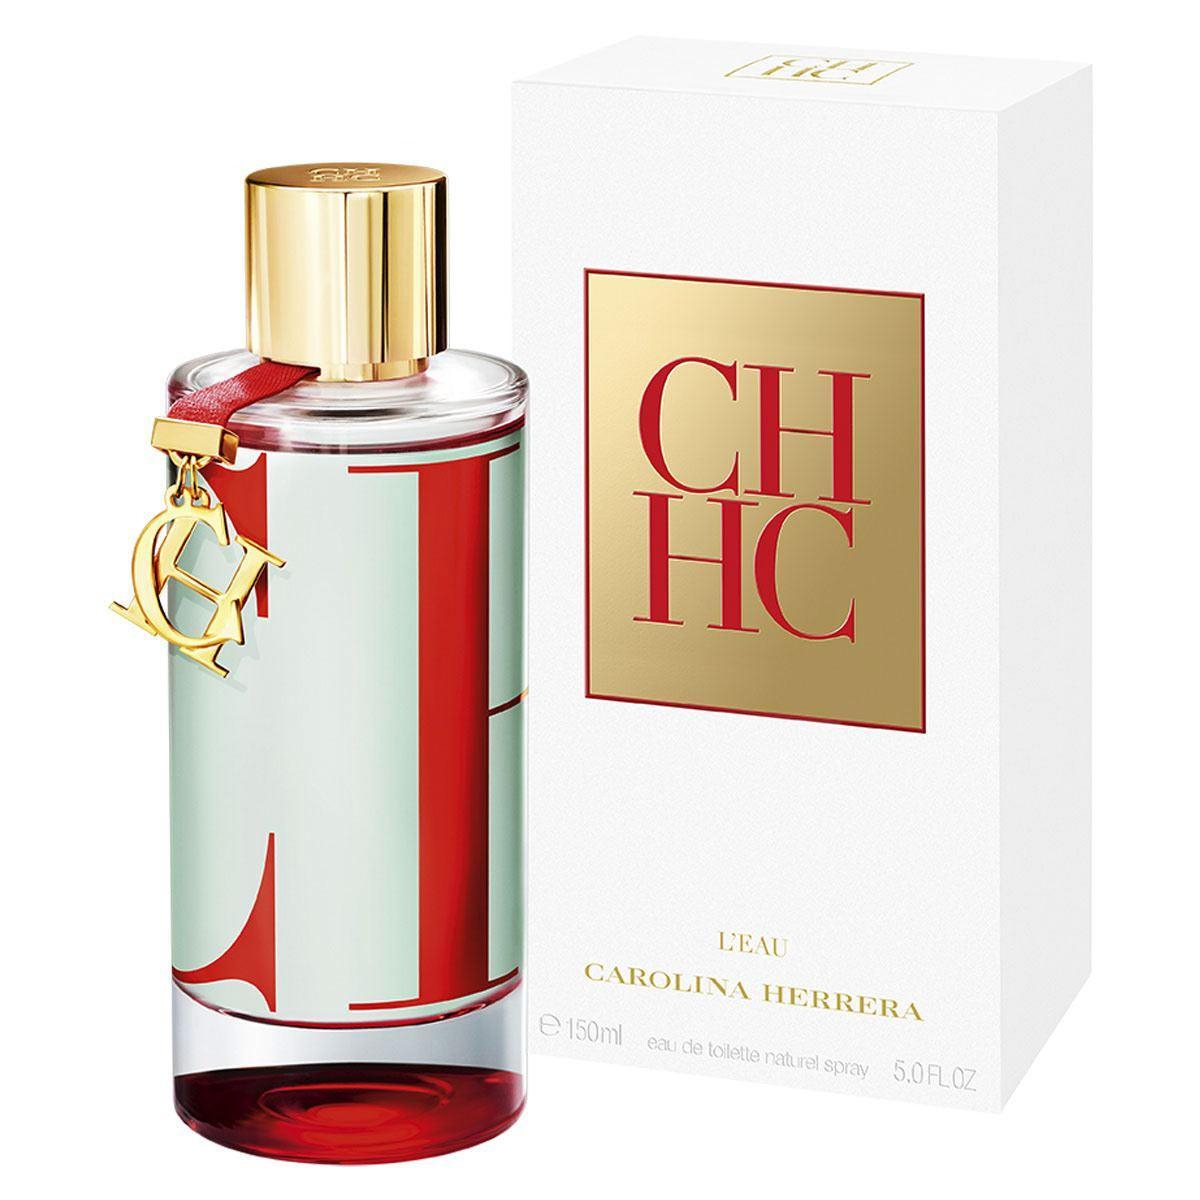 Perfume CH L'eau de Carolina Herrera EDT 150 ml